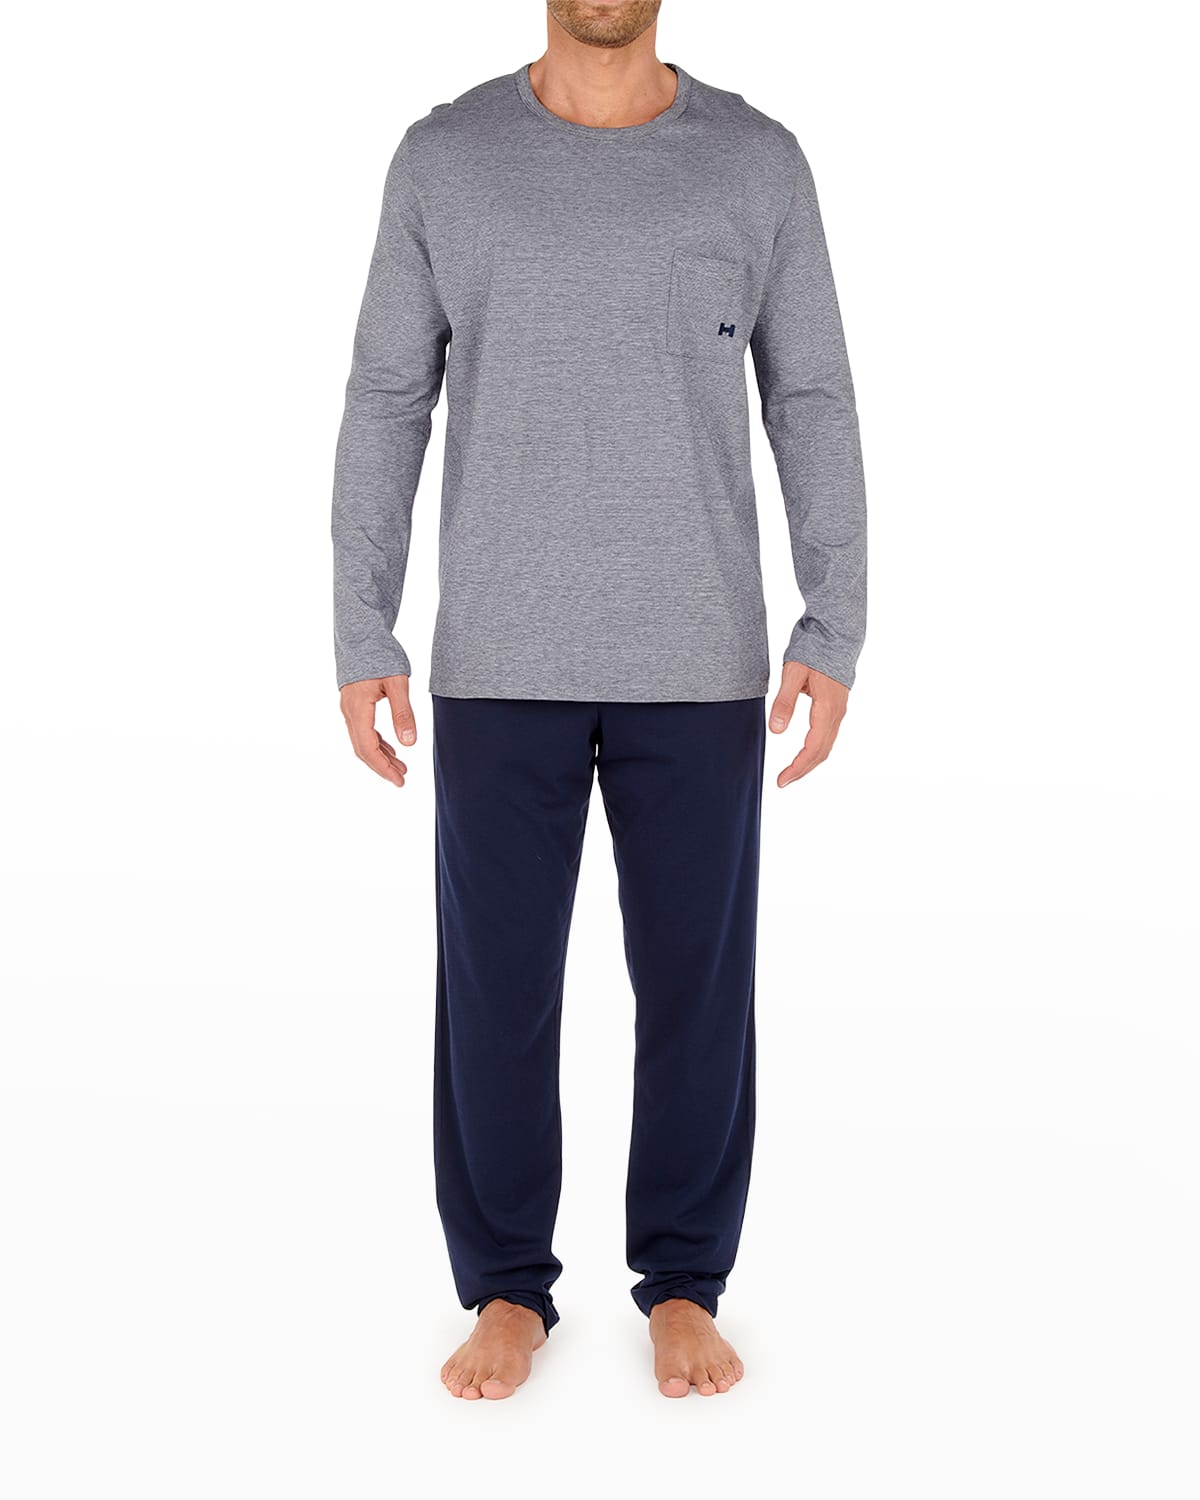 HOM Men's Long-Sleeve Pajama Set